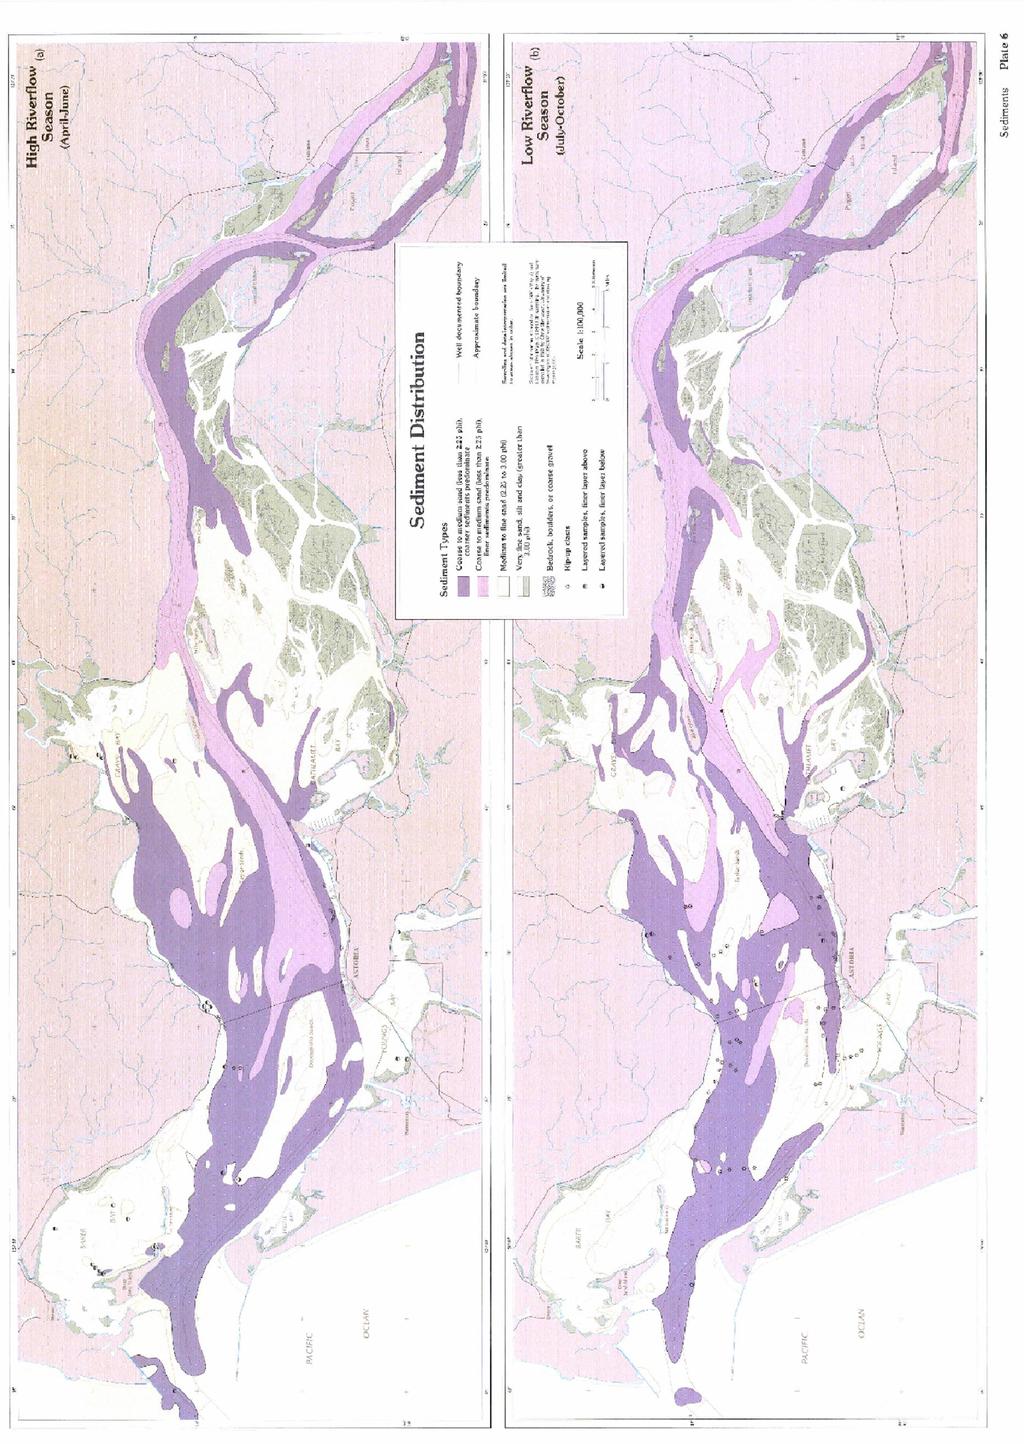 Figure E.2 Sediment distribution map of the Columbia River estuary, from Fox et al. (1984).